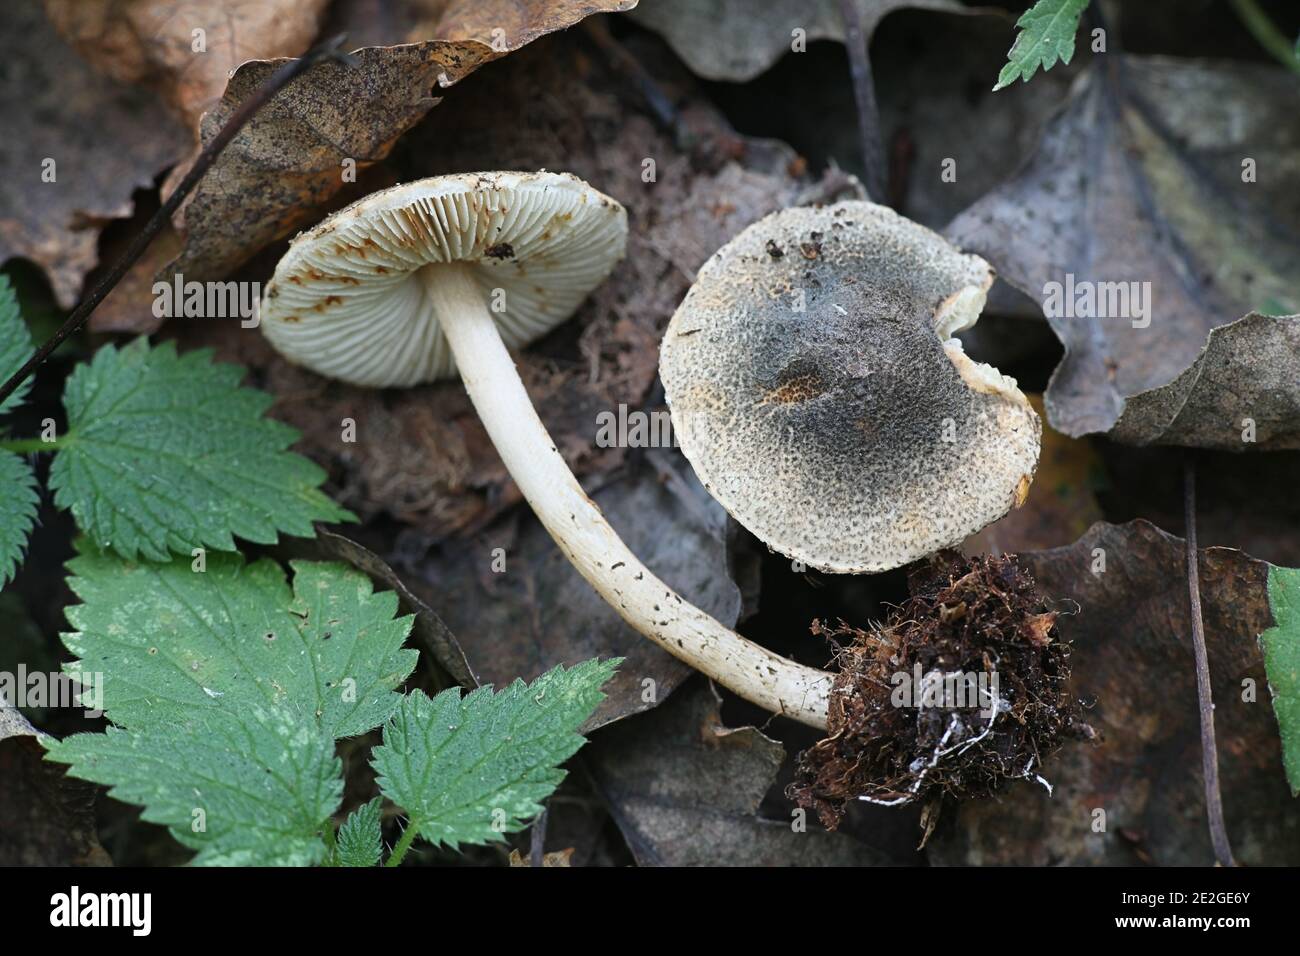 Lepiota grangei, known as the Green Dapperling, wild mushroom from Finland Stock Photo